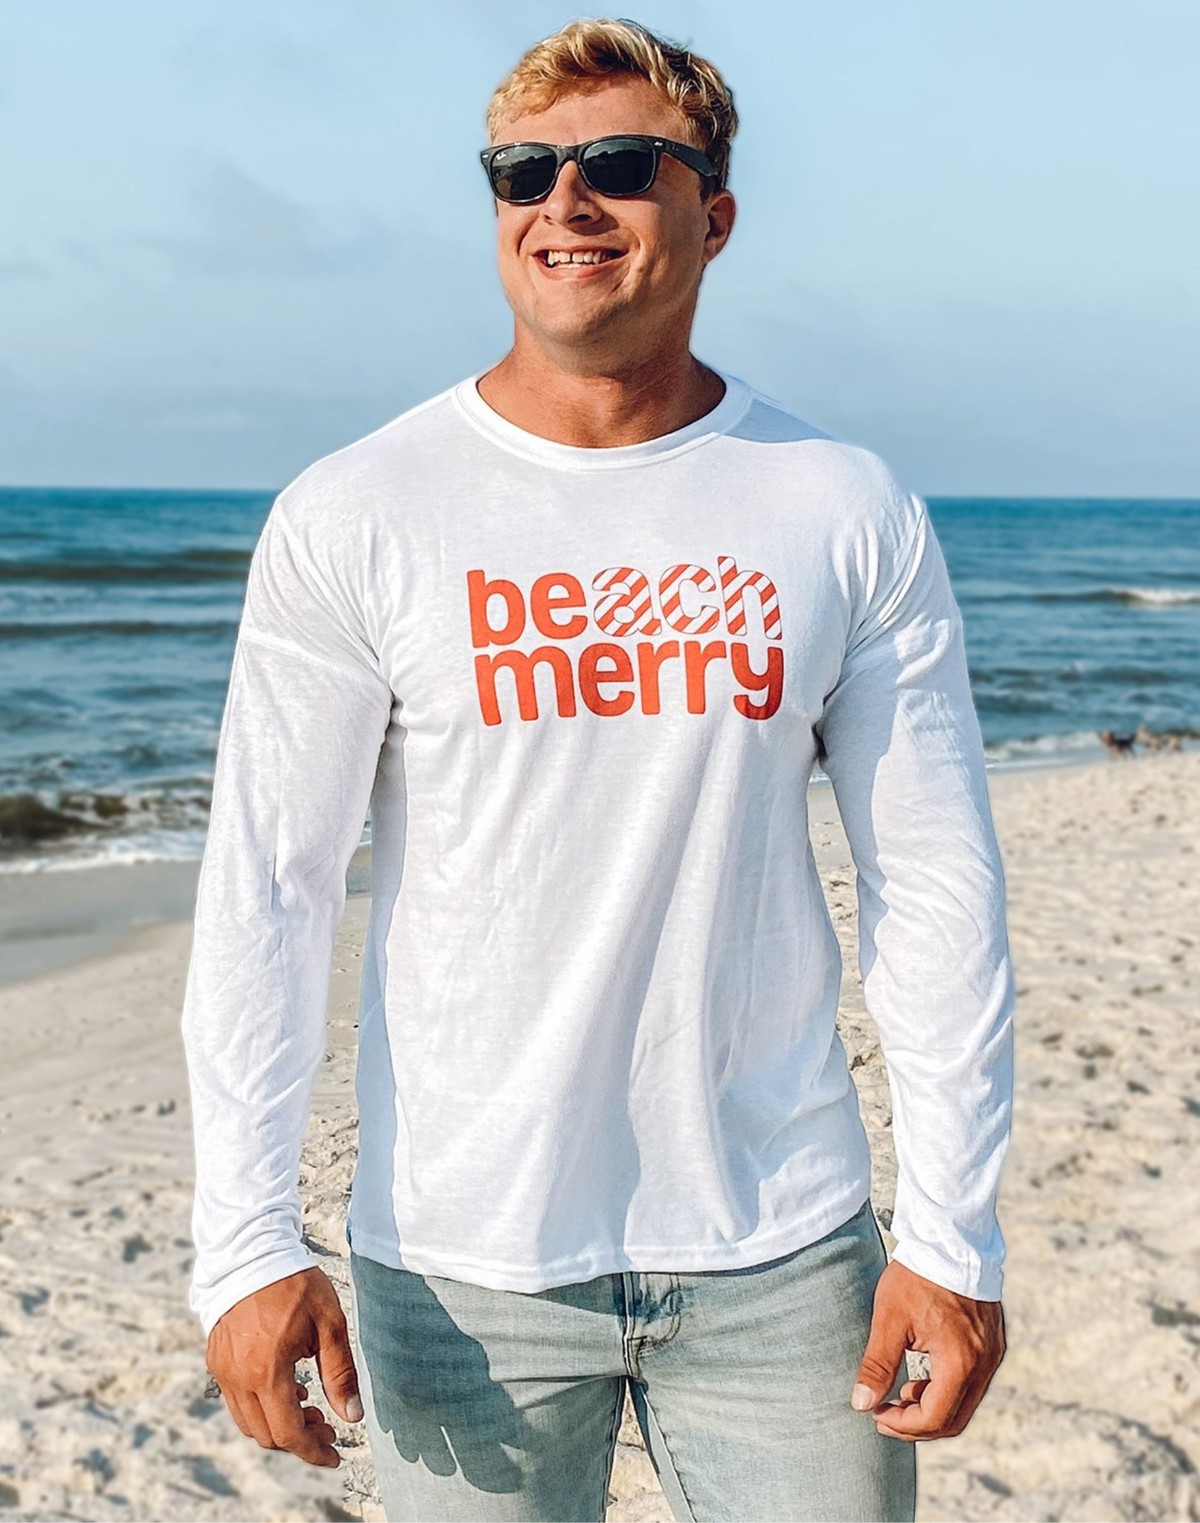 Beach Merry Stripes Long Sleeve Tee - Men - White item